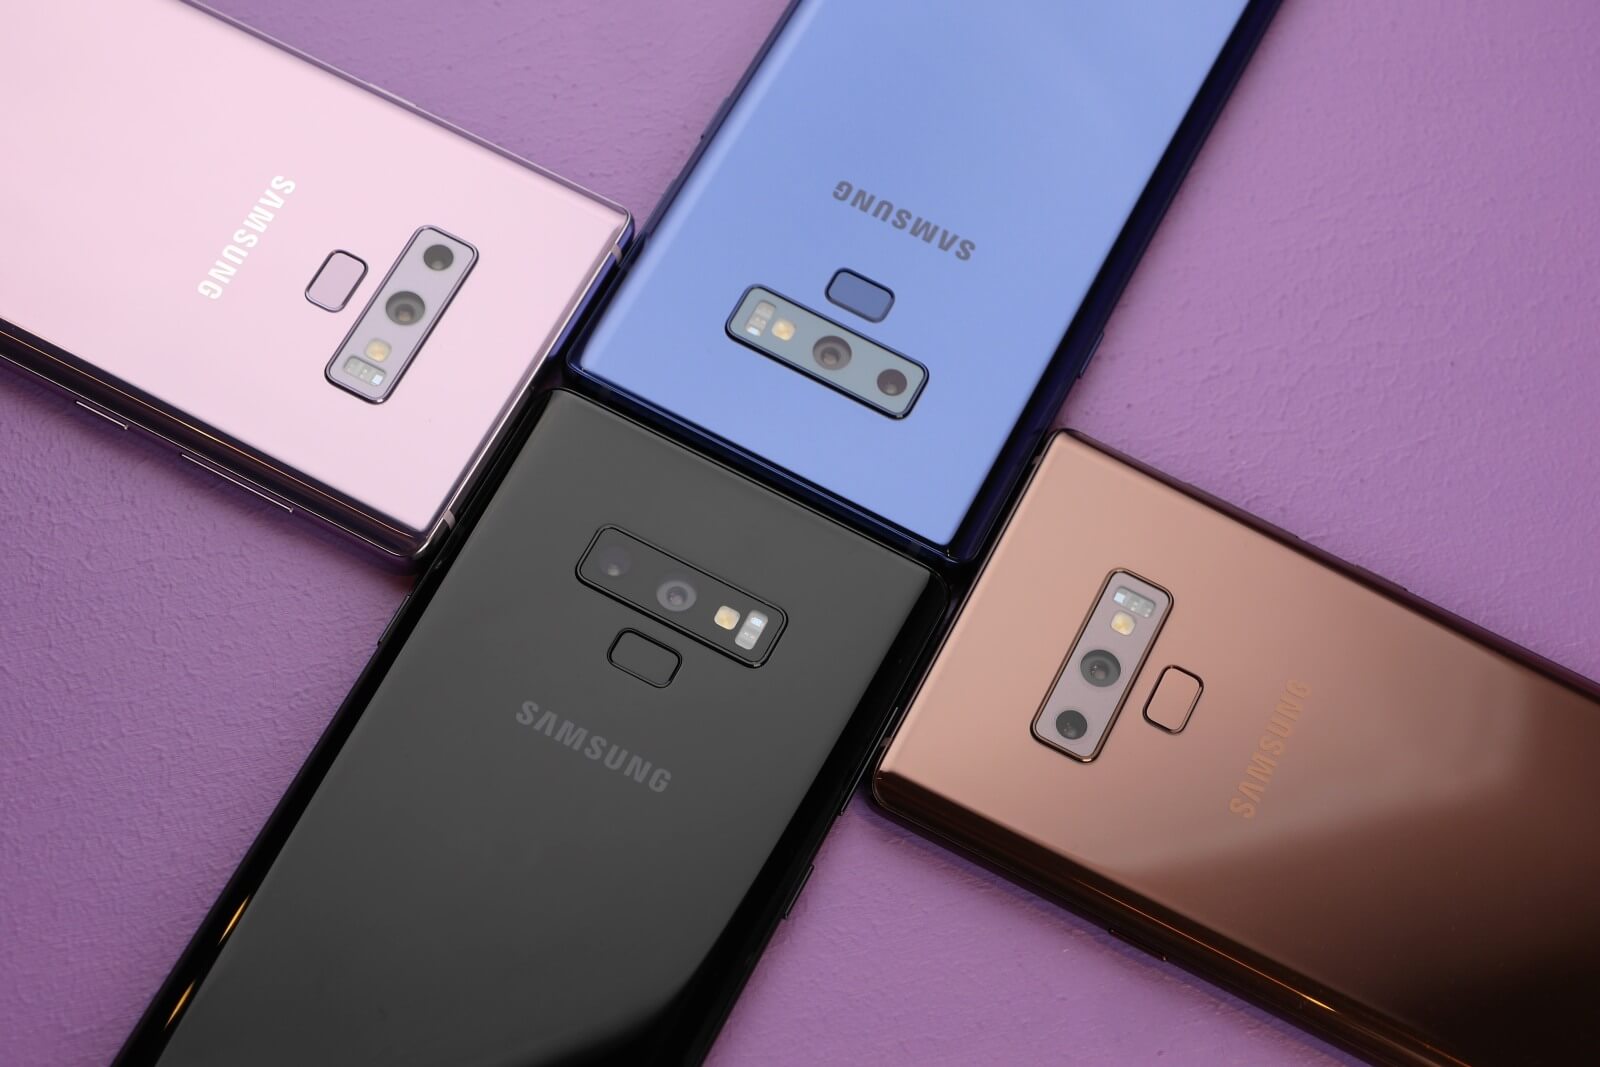 Samsung Galaxy Note 9 FirmwareUpdate [N960FXXS2ARJ2] [SWC] [8.1.0